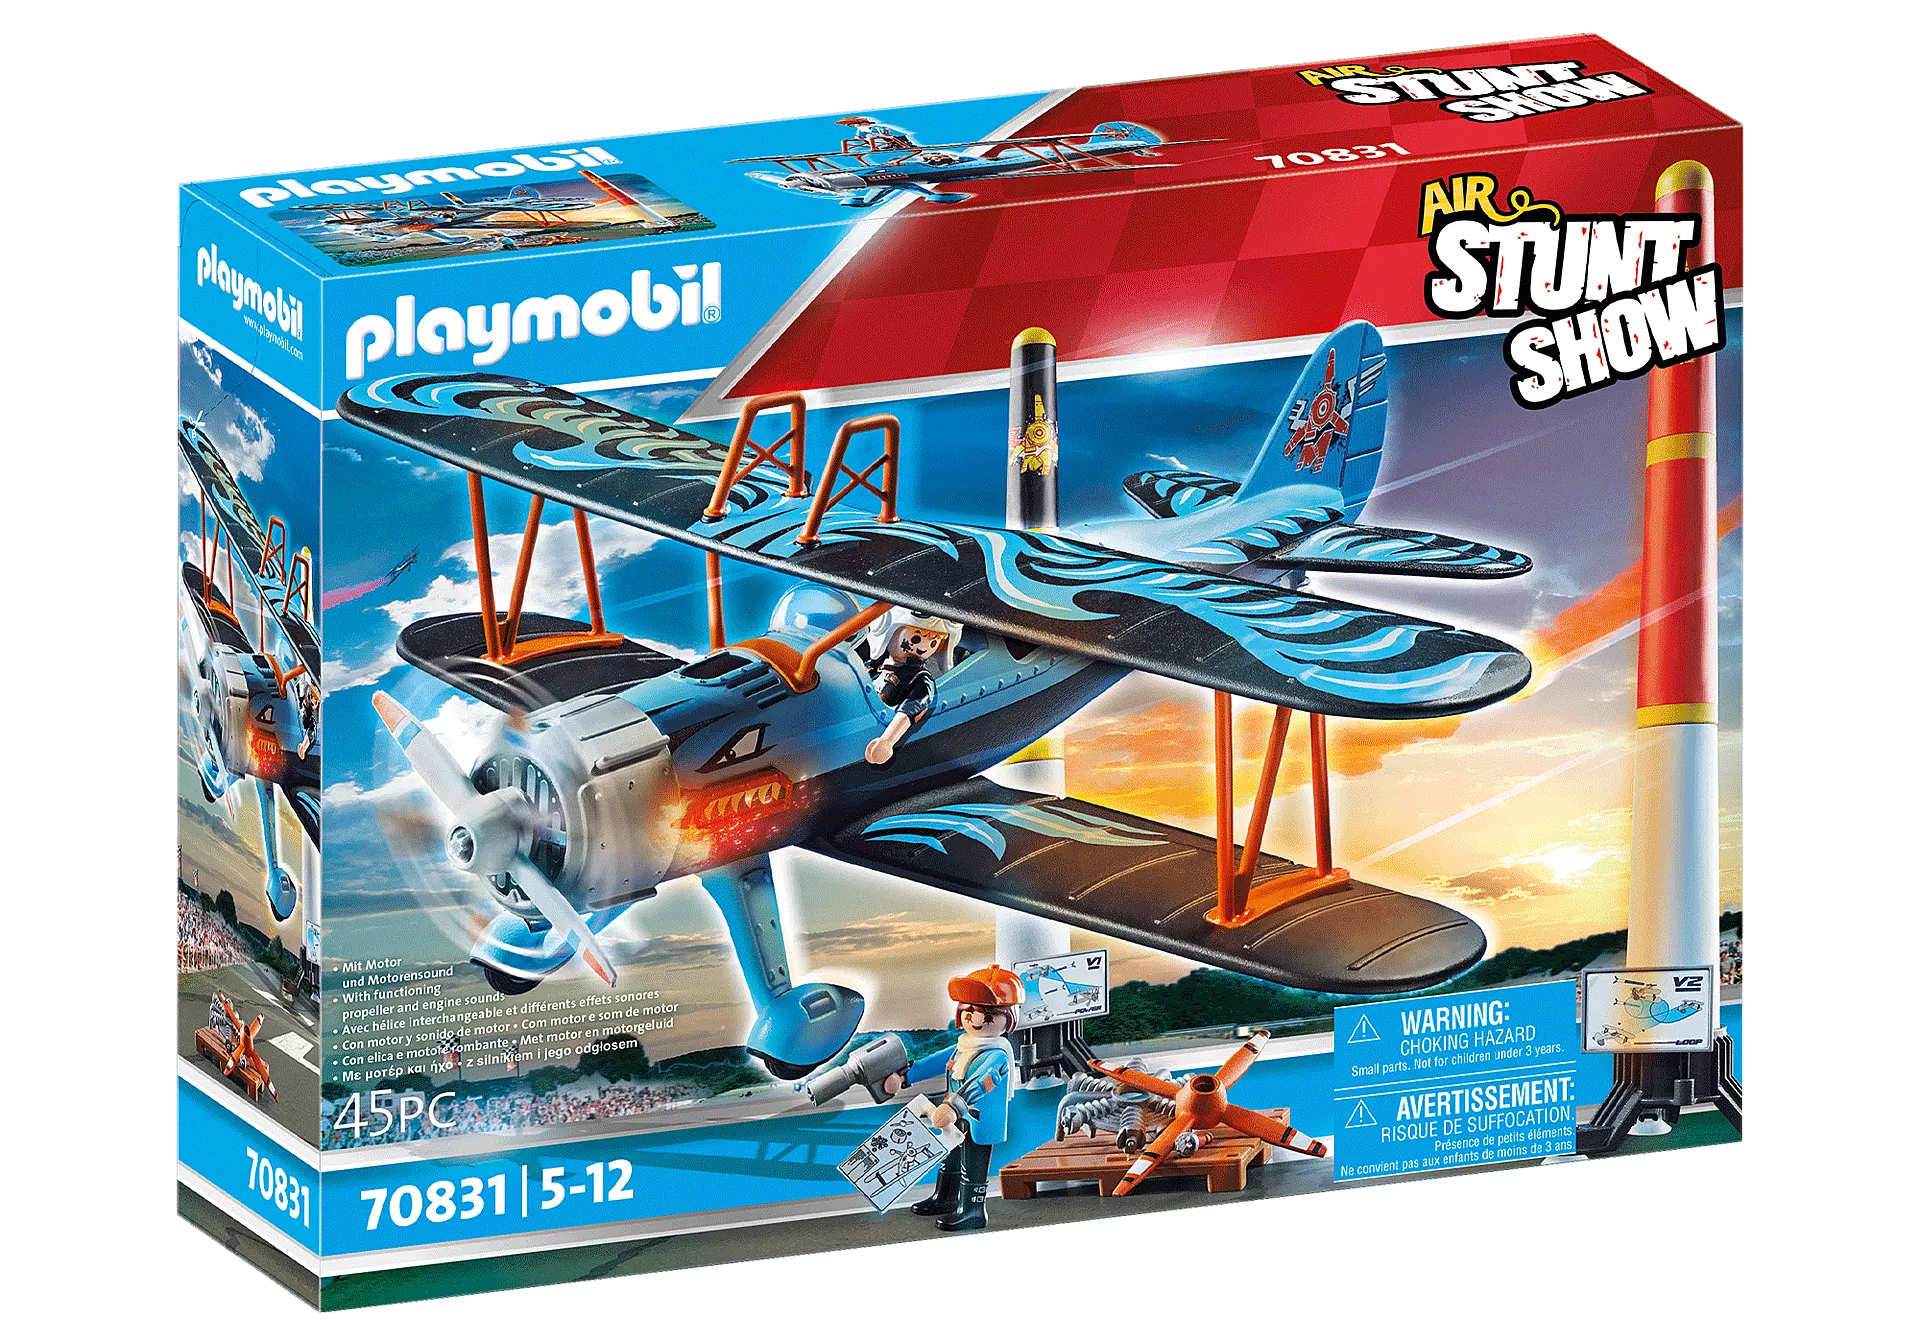 Playmobil Air Air Stunt Show Phoenix Biplane